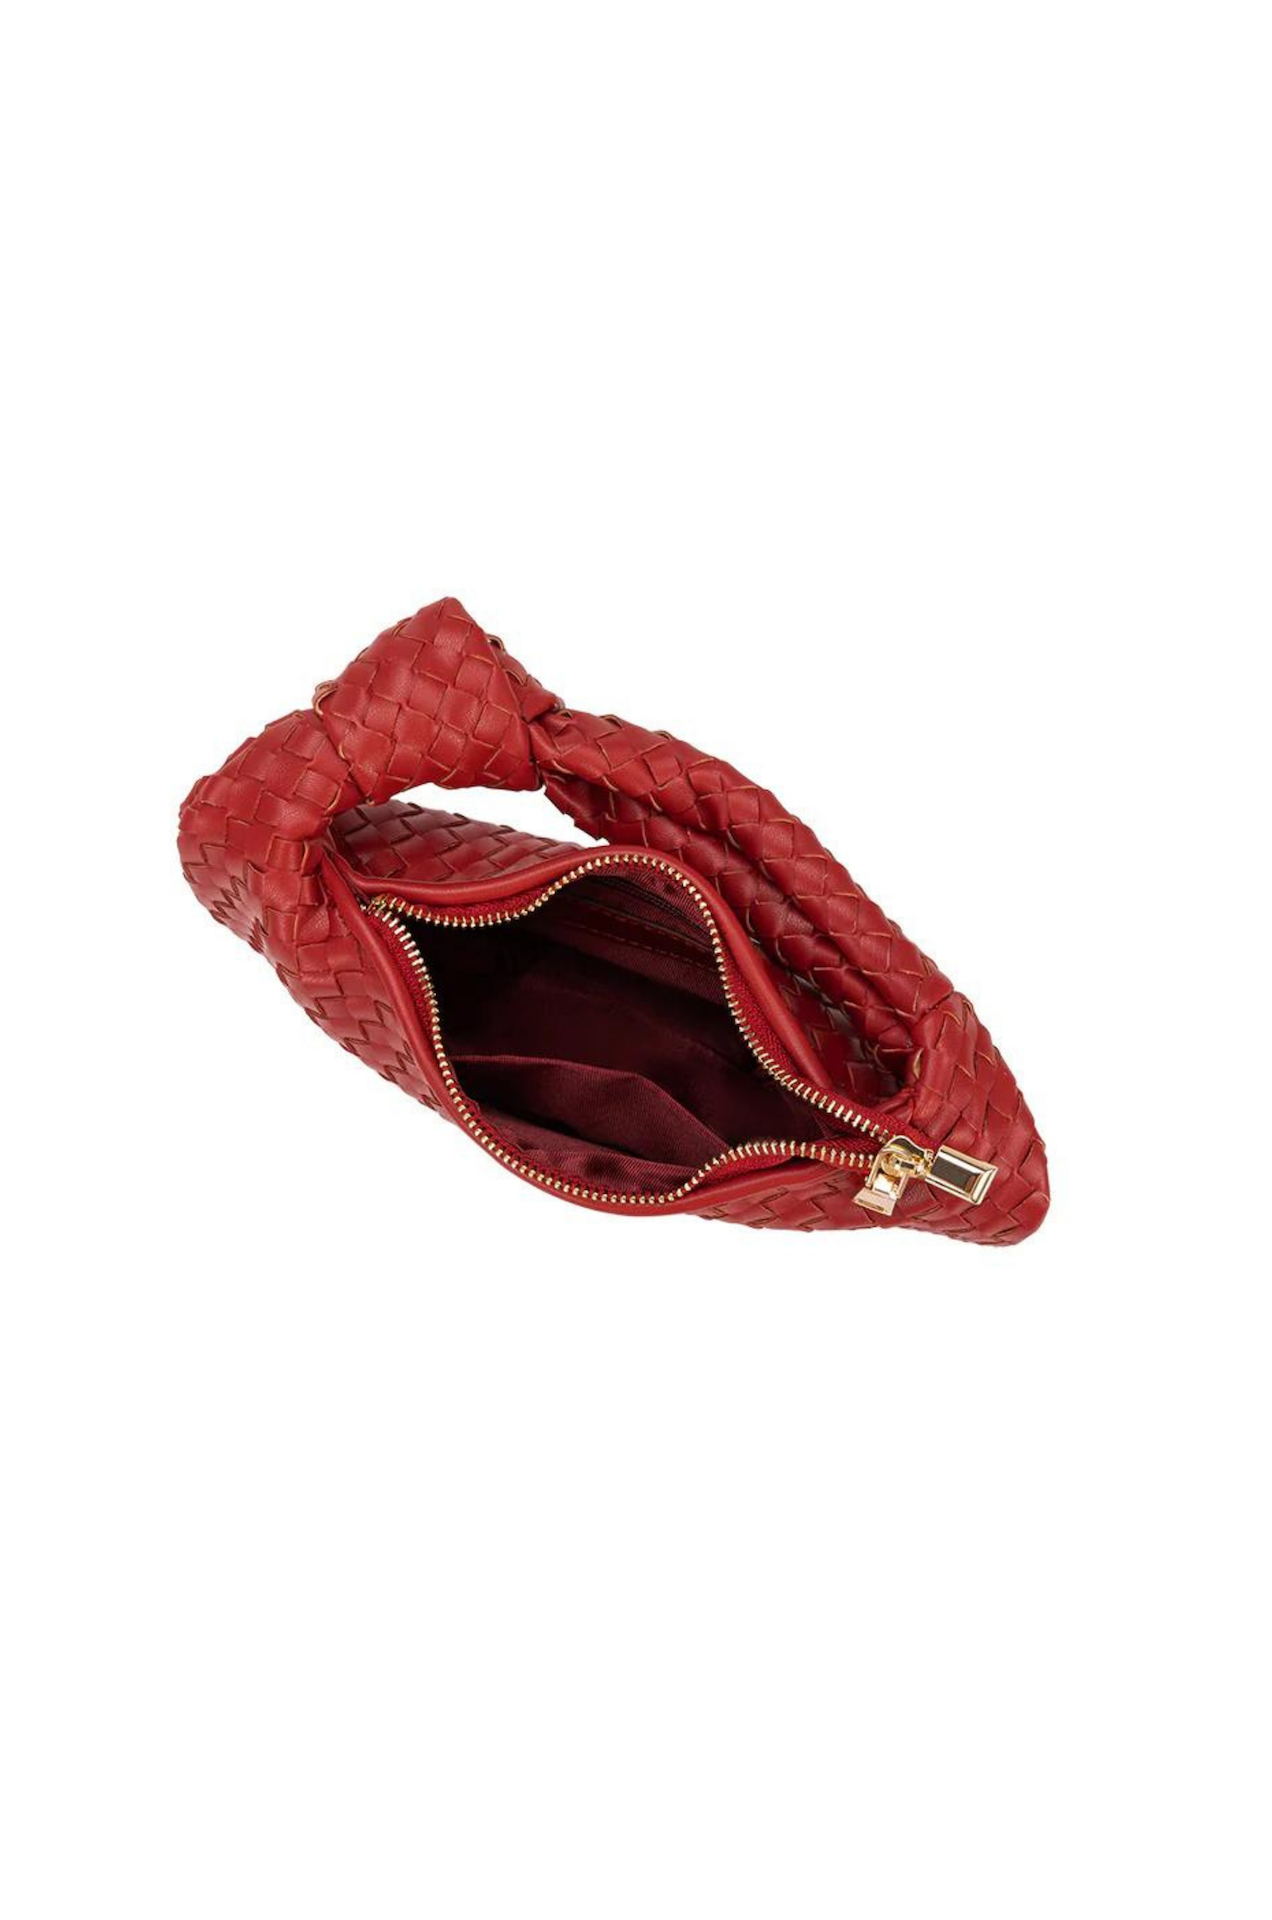 red vegan leather woven knot mini bag